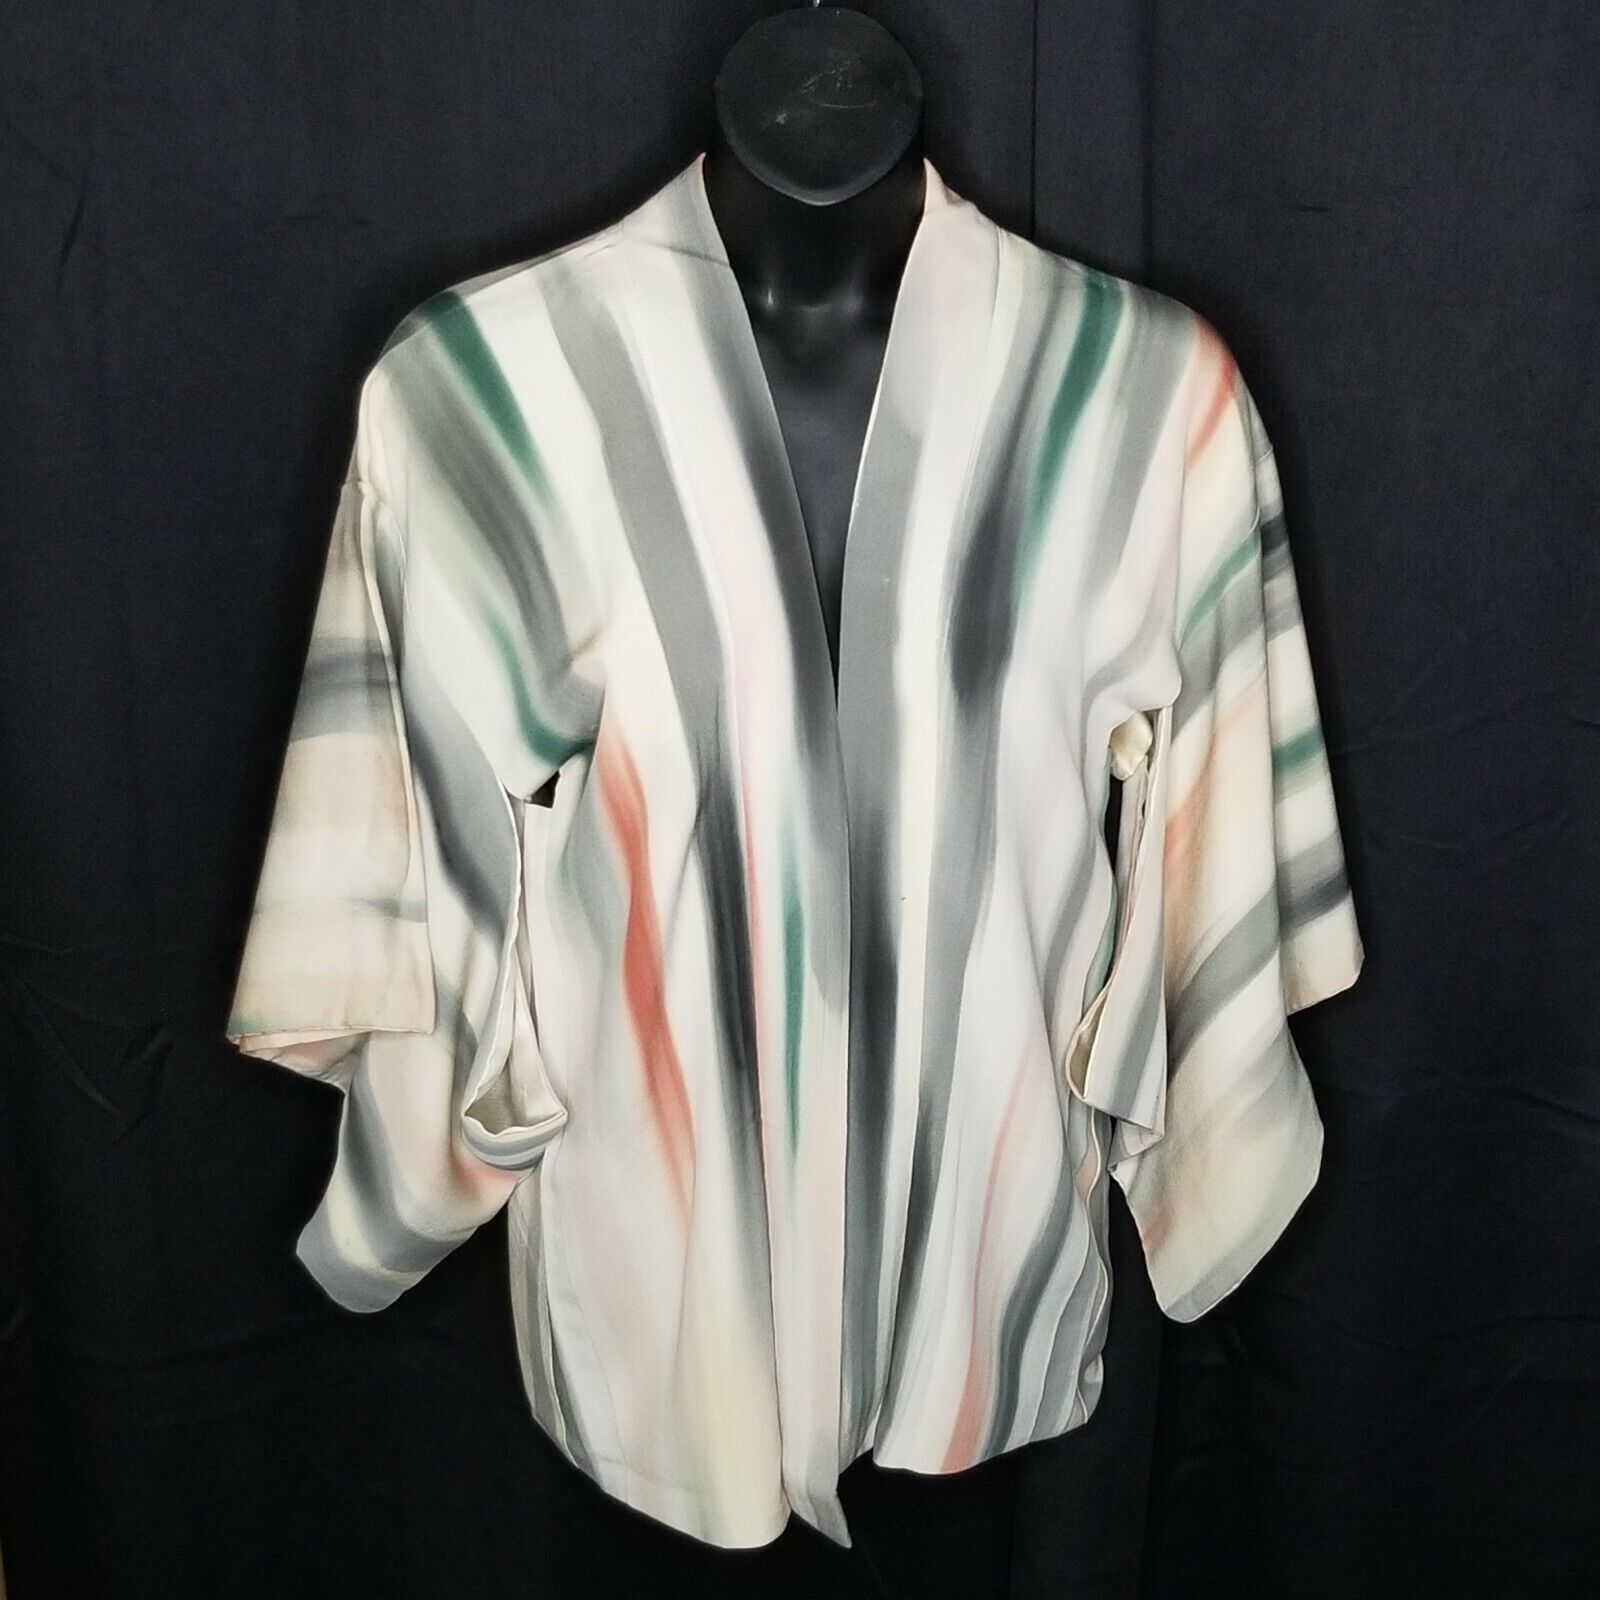 Vintage Japanese Woman's Haori Kimono Jacket Silk Cover Up - Subtle Stripes